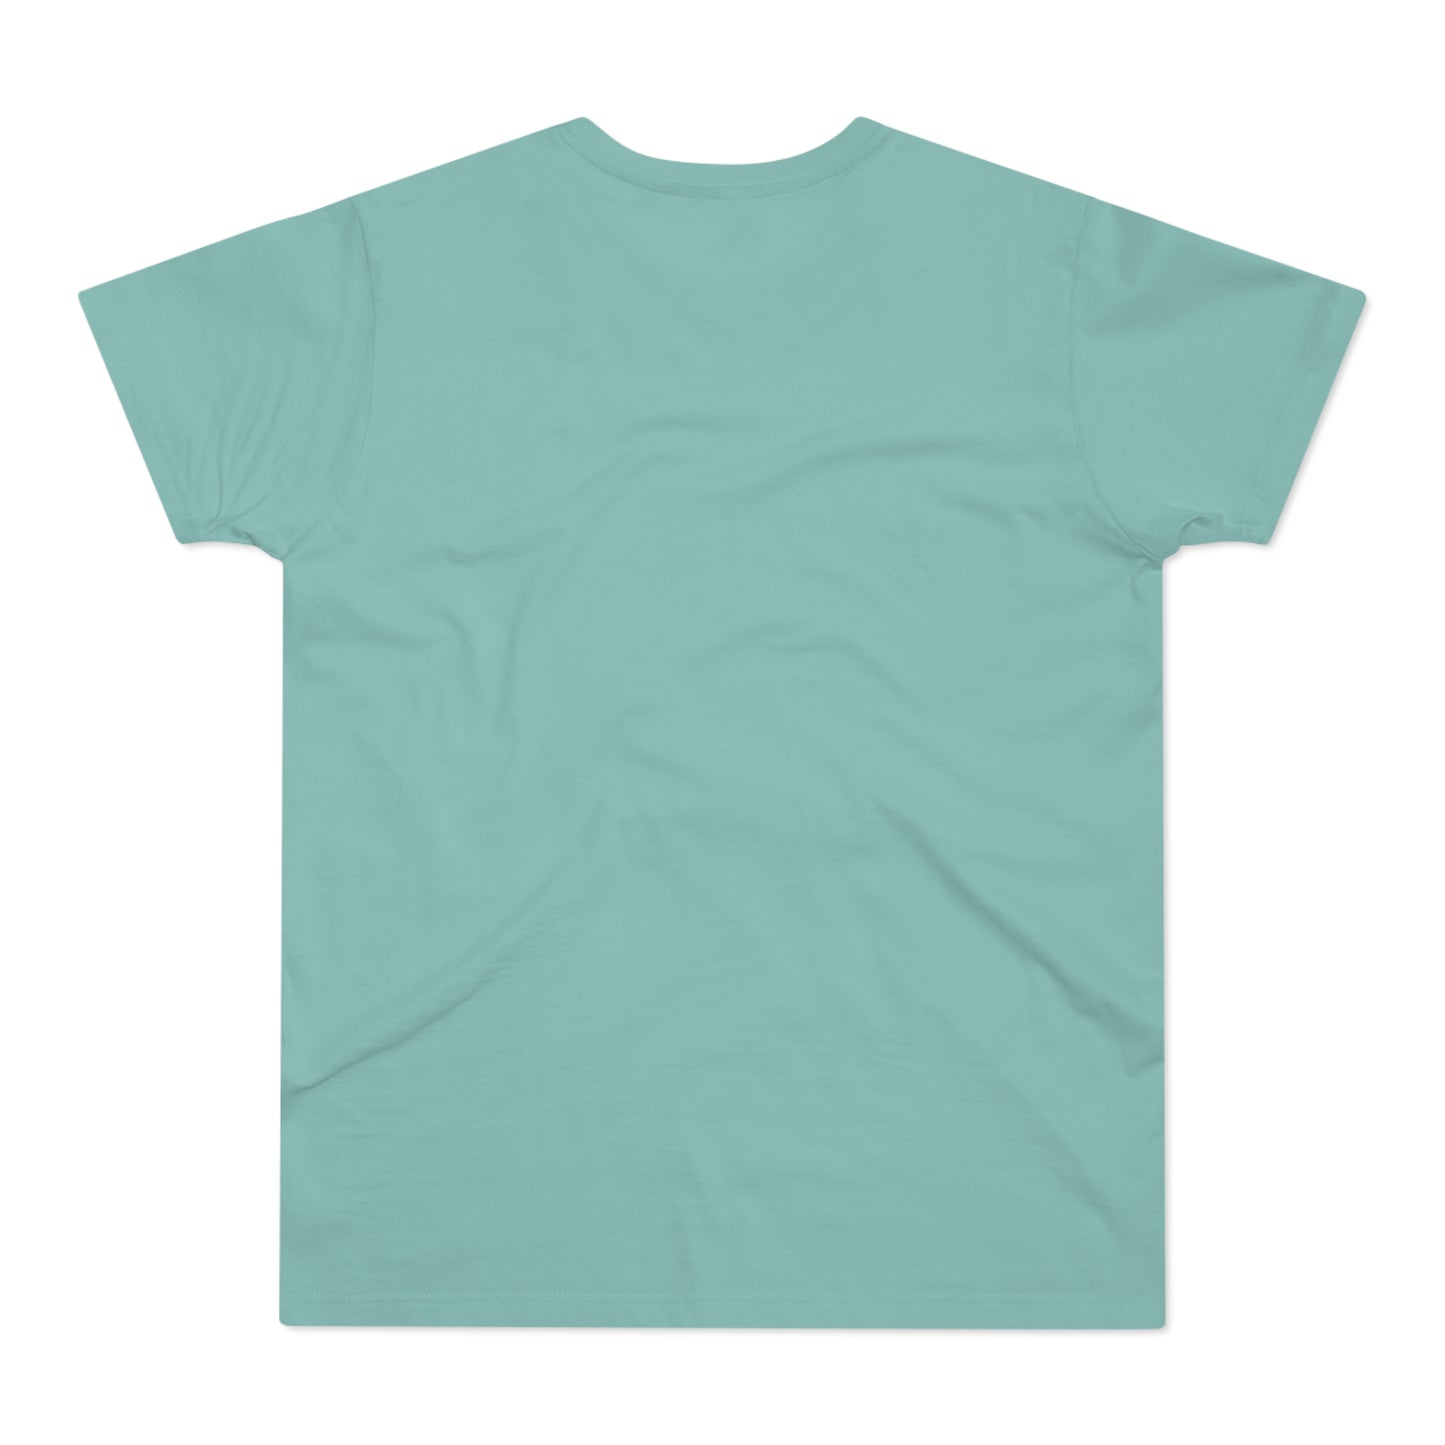 Copy of Camiseta de viajero, Camiseta buena vida, camiseta retro, camiseta de hombre, camiseta inspiradora, camiseta de viajero, camiseta pura vida